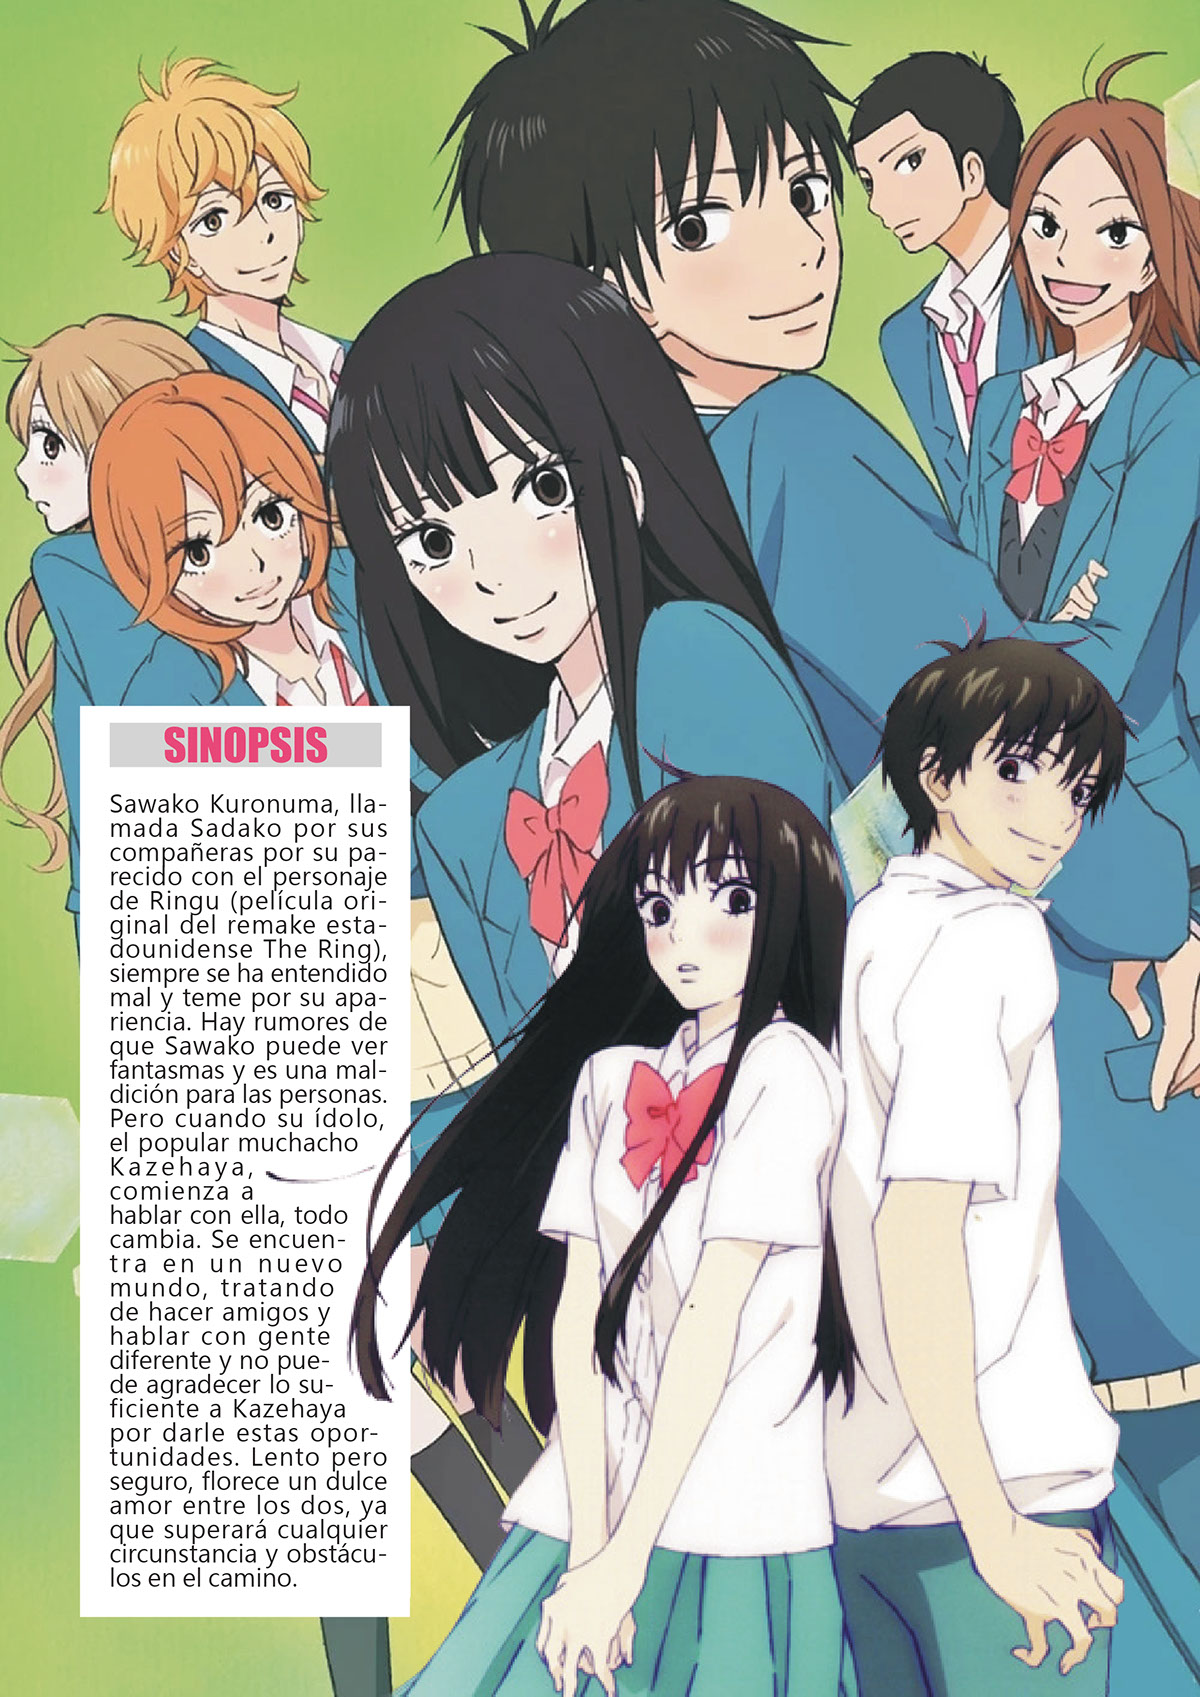 Revista- Anime- Kimi ni todoke rendition image